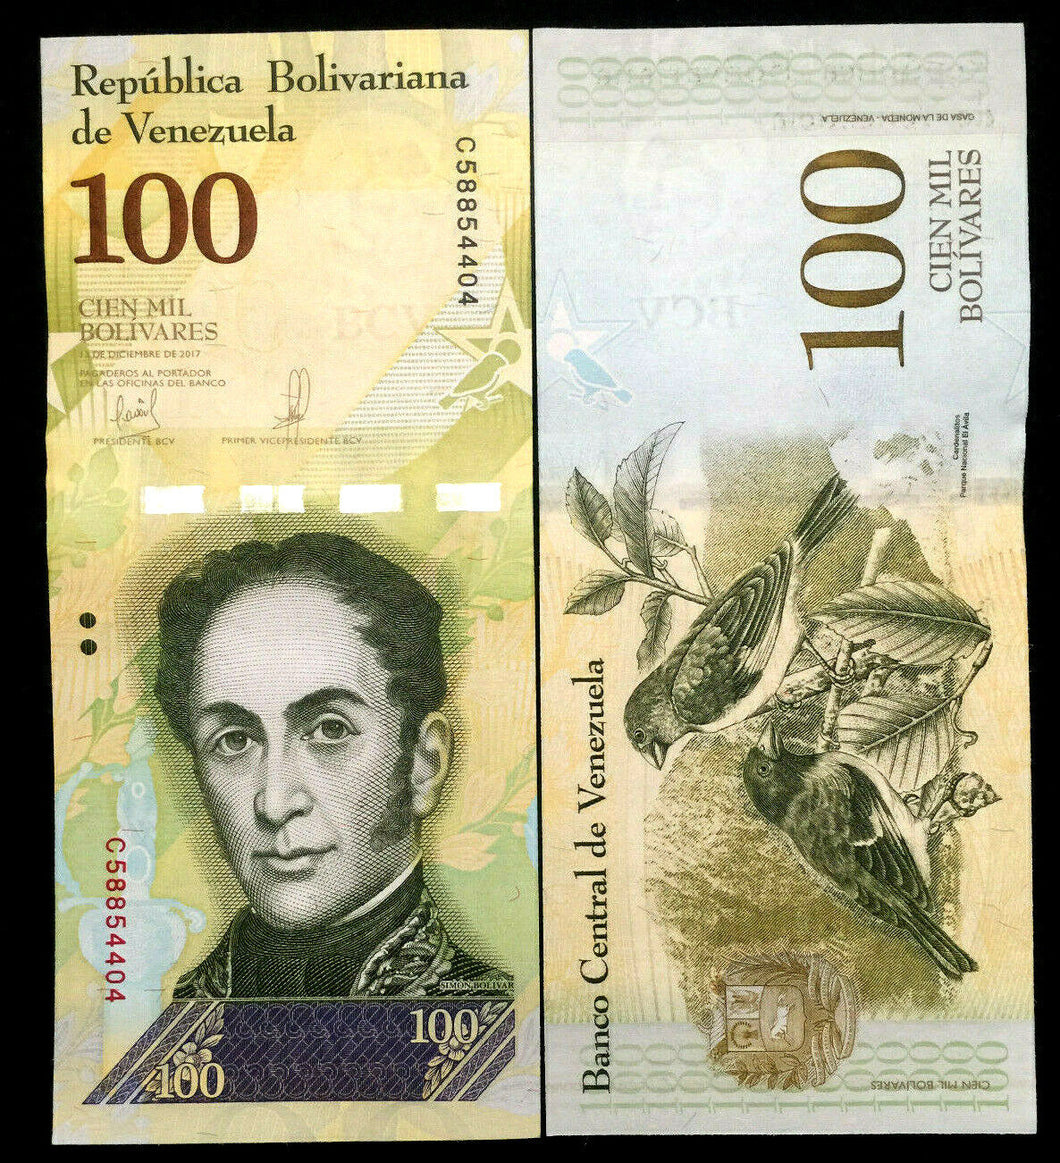 VENEZUELA 100,000 Bolivar 2017 World Paper Money UNC Currency Bill